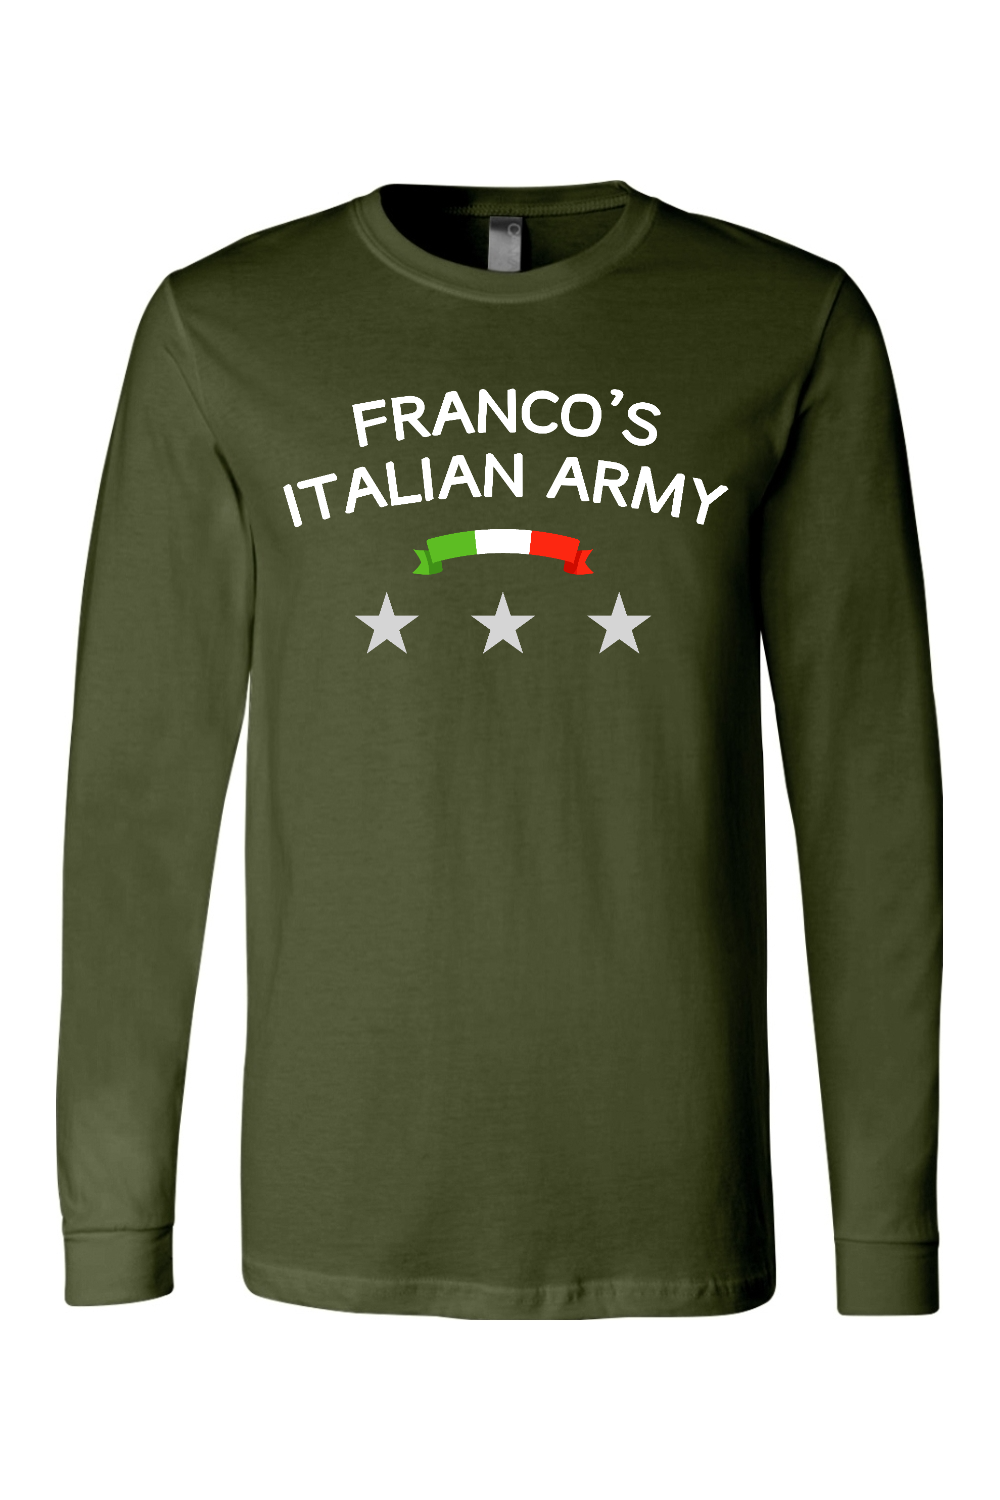 Franco's Italian Army - BELLA + CANVAS Unisex Jersey Long Sleeve Tee - Yinzylvania